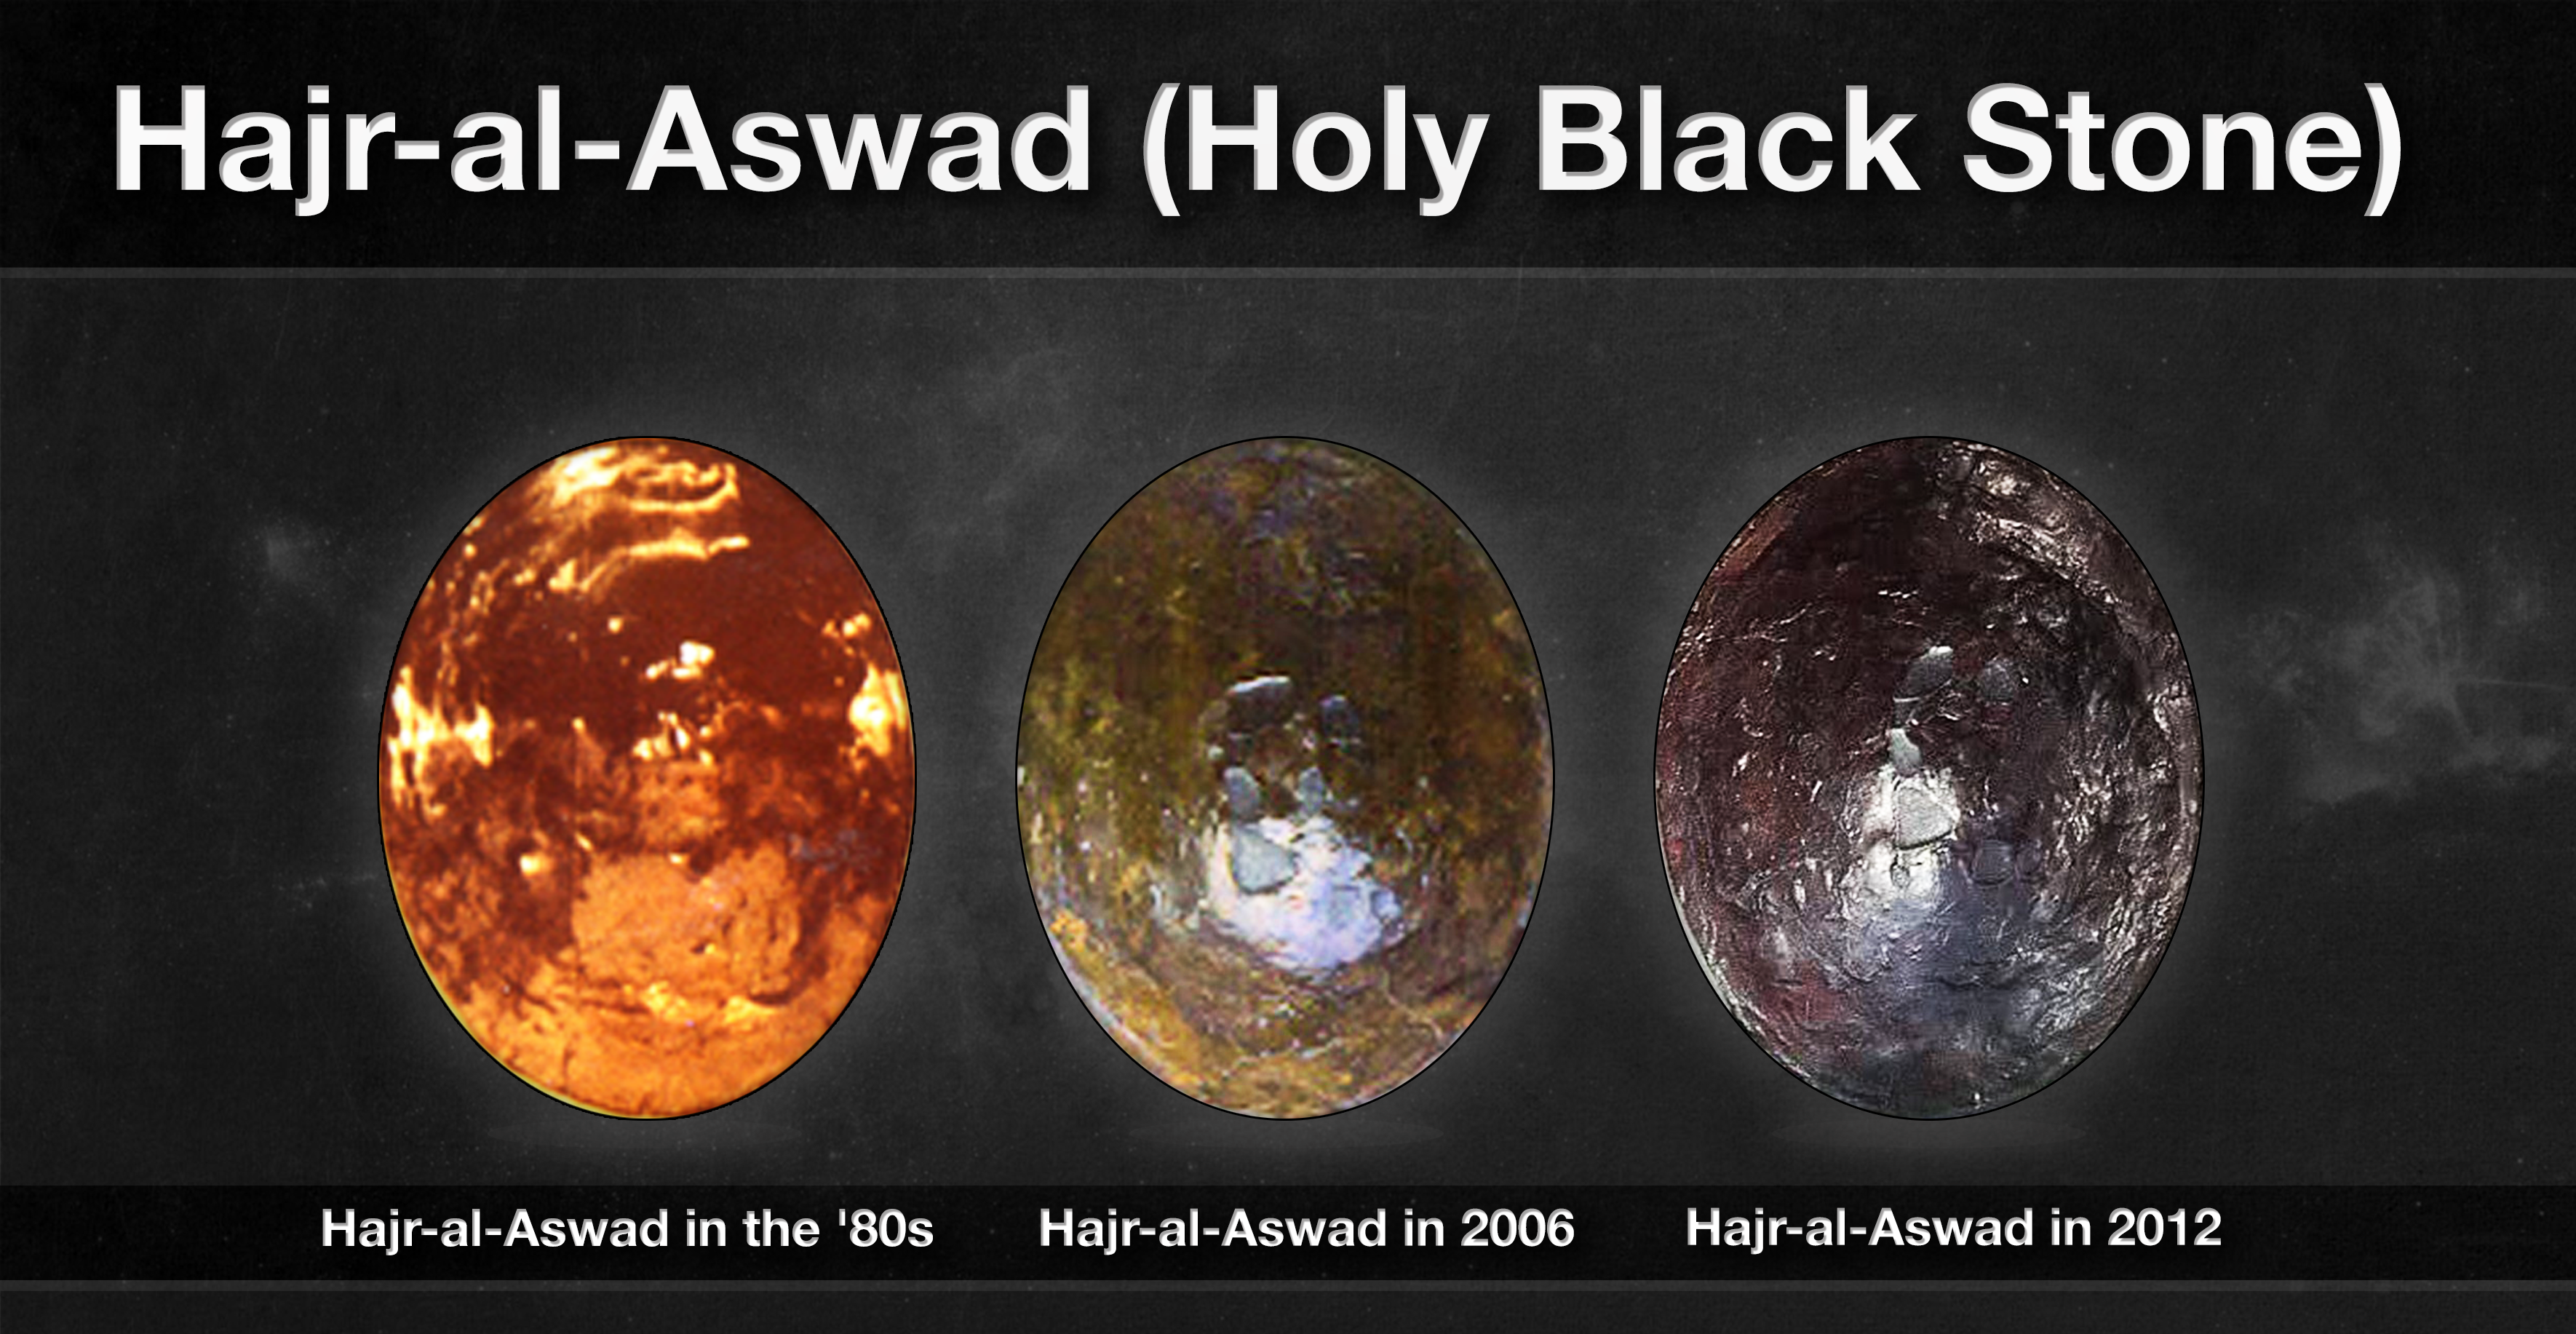 Hajar-al-Aswad throughout the years